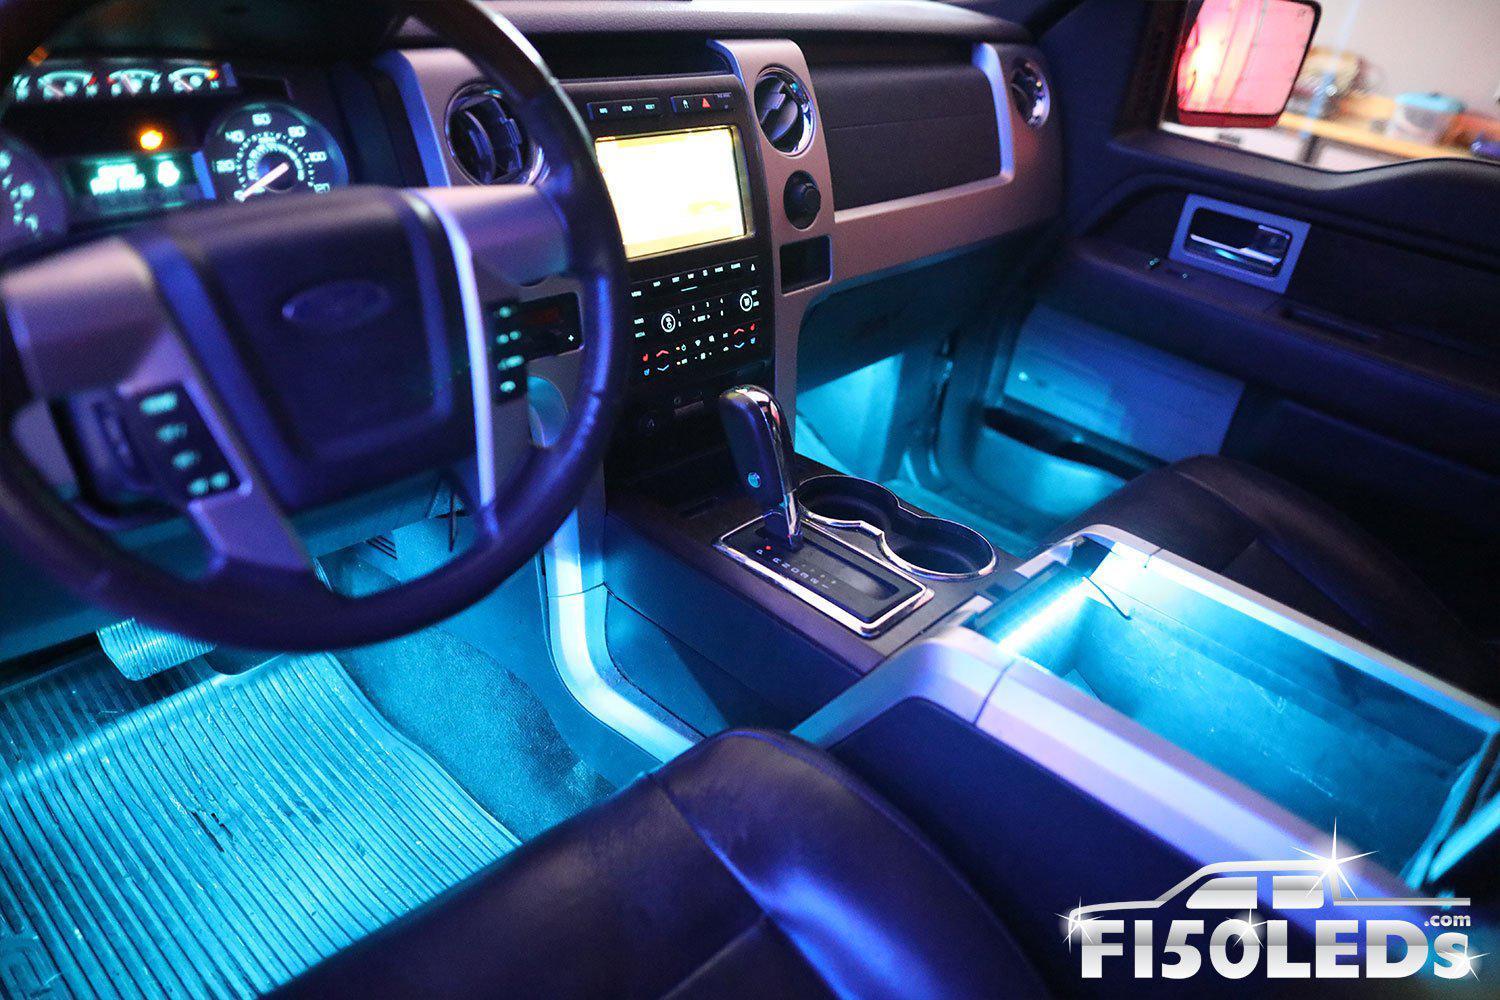 2017 F150 Led Interior Ambient Lights